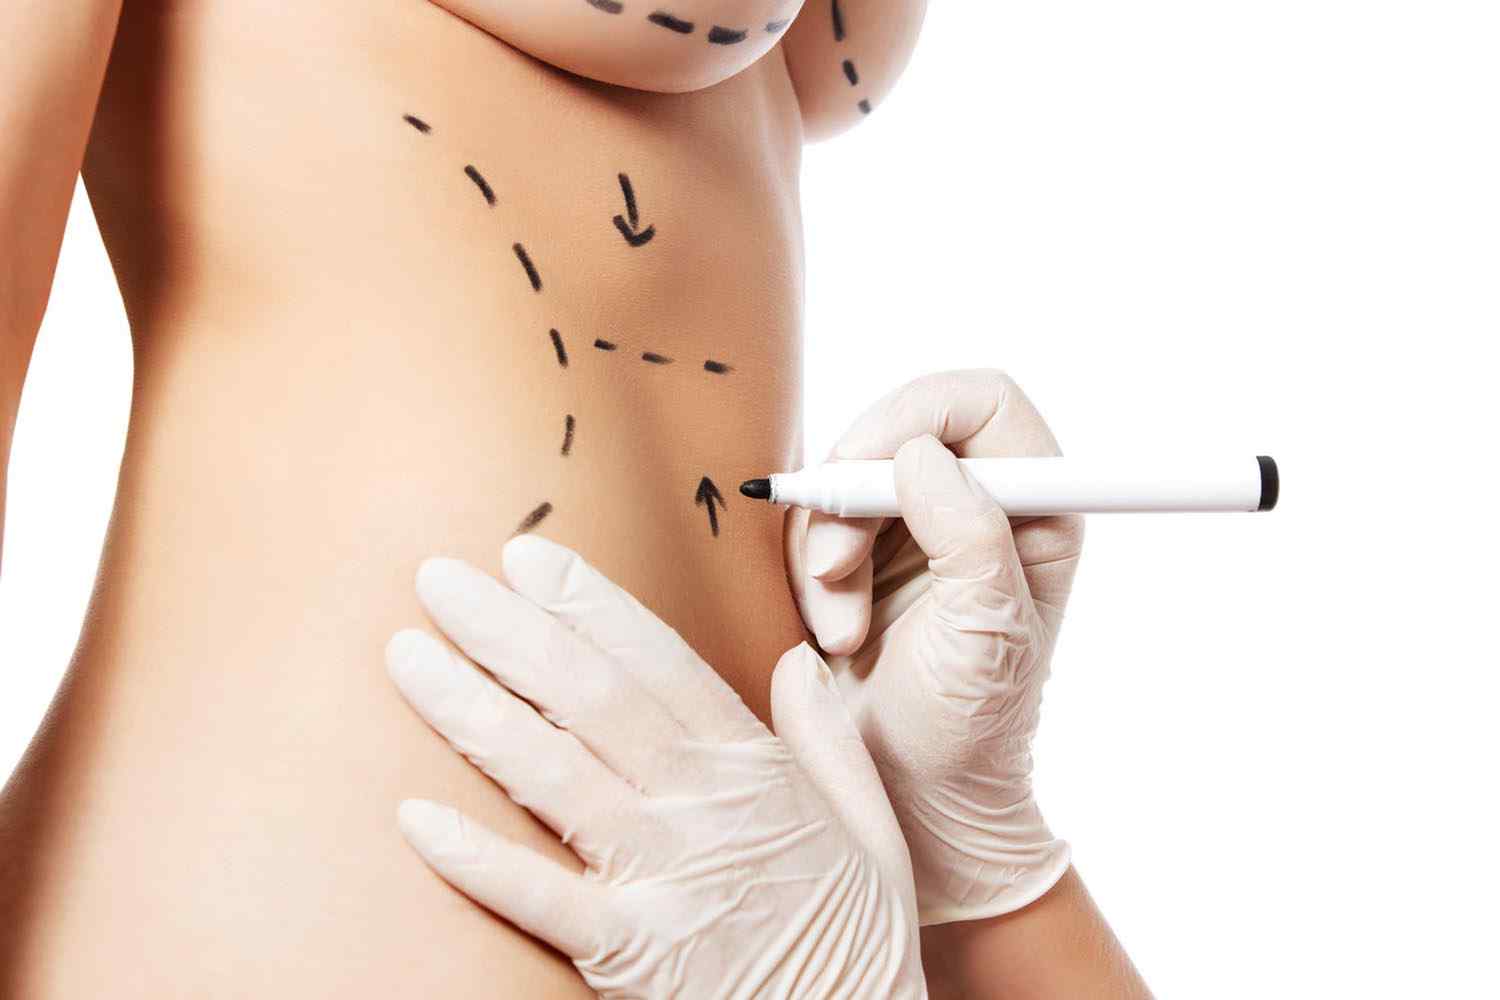 https://www.drmarcogerardi.com/wp-content/uploads/2020/10/cosmetic-surgery-blog-11.jpg